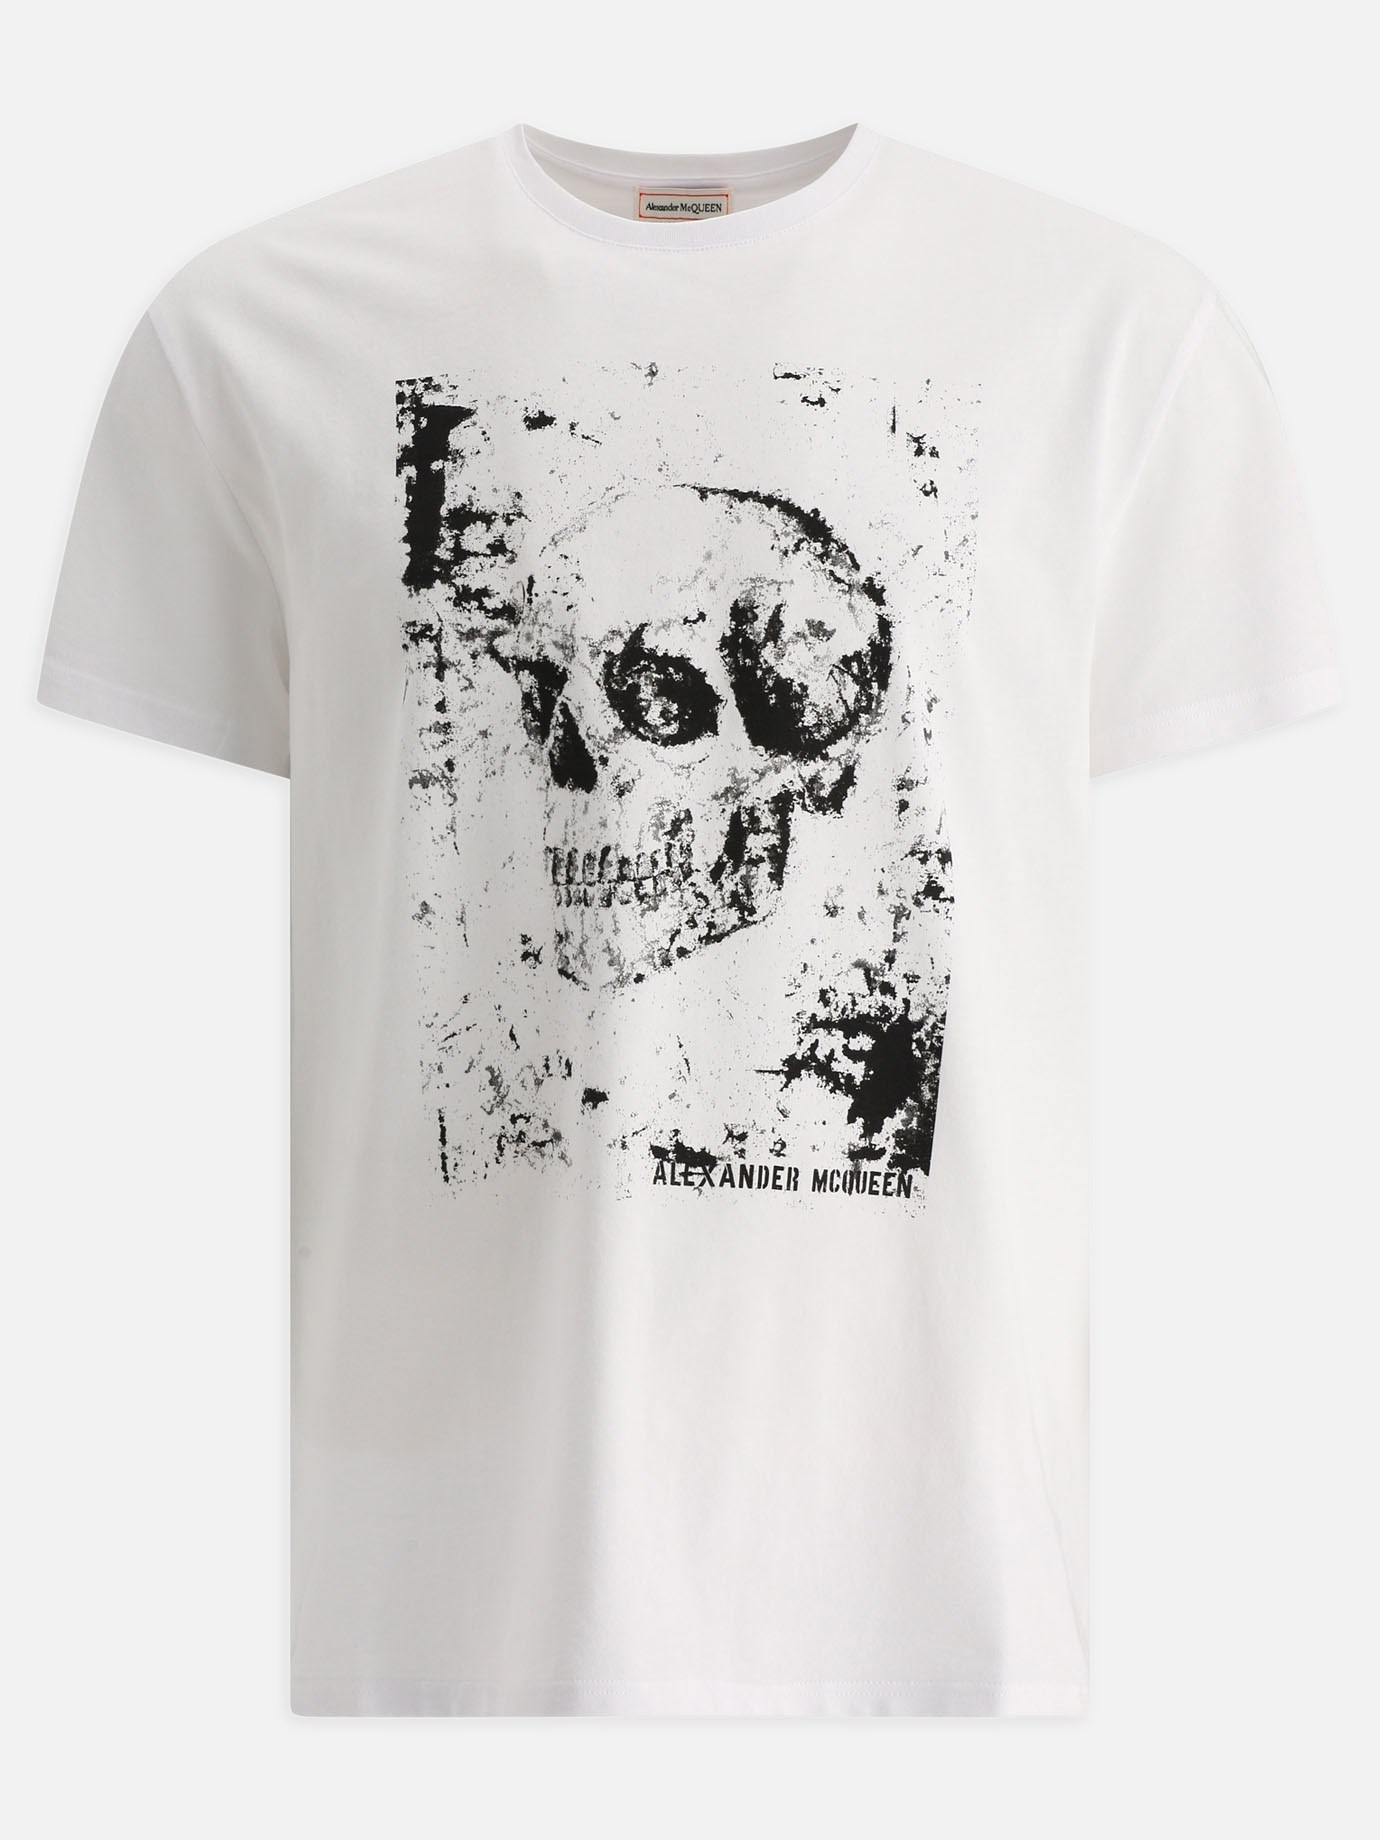  Skull  t-shirtby Alexander McQueen - 0